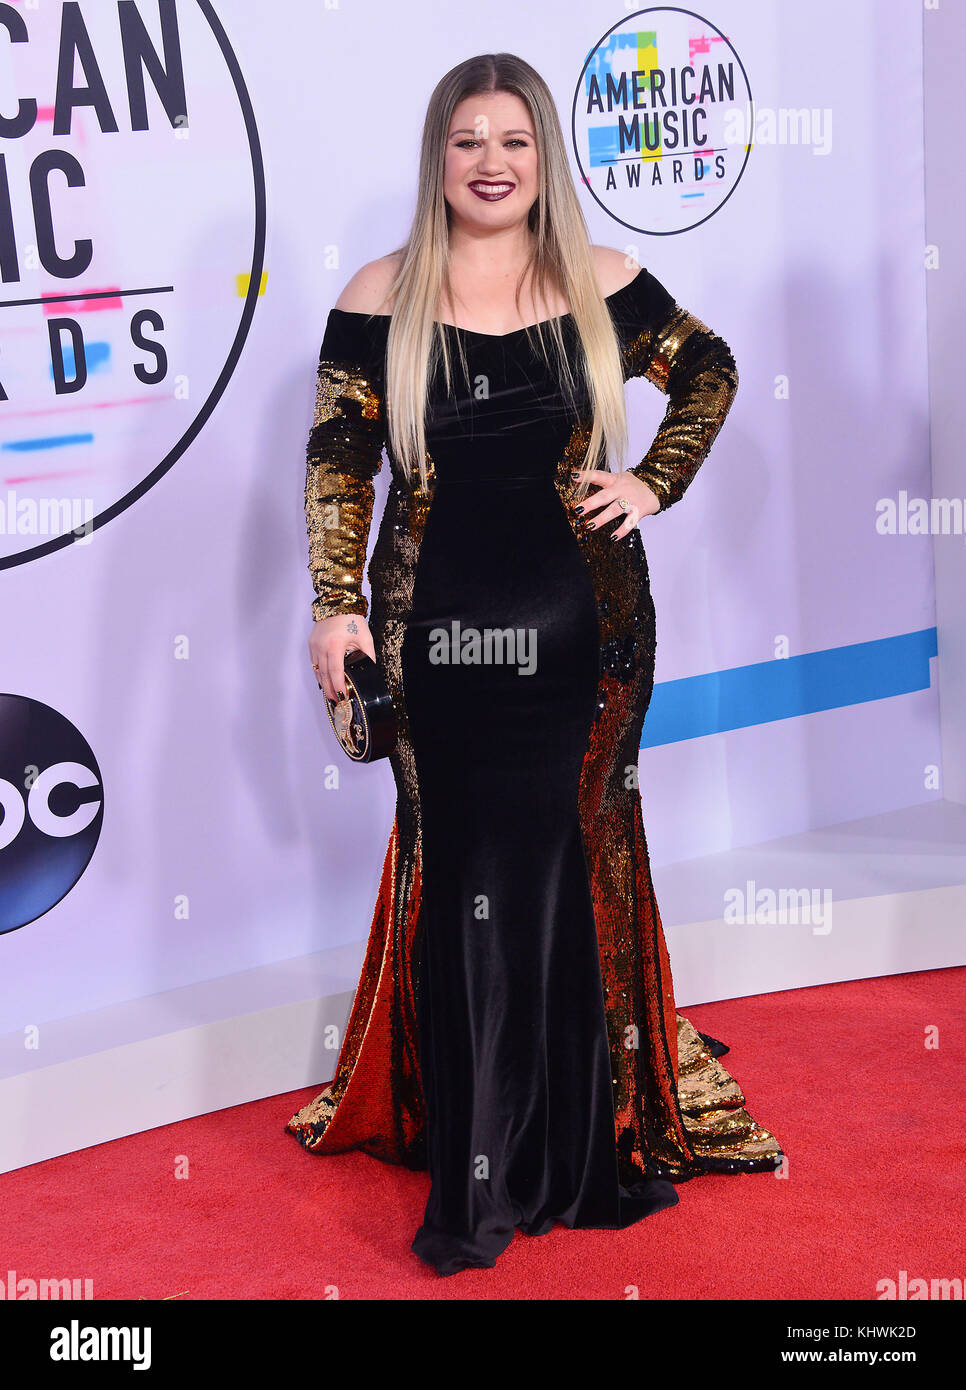 Los Angeles, USA. 19 Nov, 2017 Kelly Clarkson 180 2017 American Music Awards bei Microsoft Theater kommt am 19. November 2017 in Los Angeles, Kalifornien Quelle: tsuni/usa/alamy leben Nachrichten Stockfoto